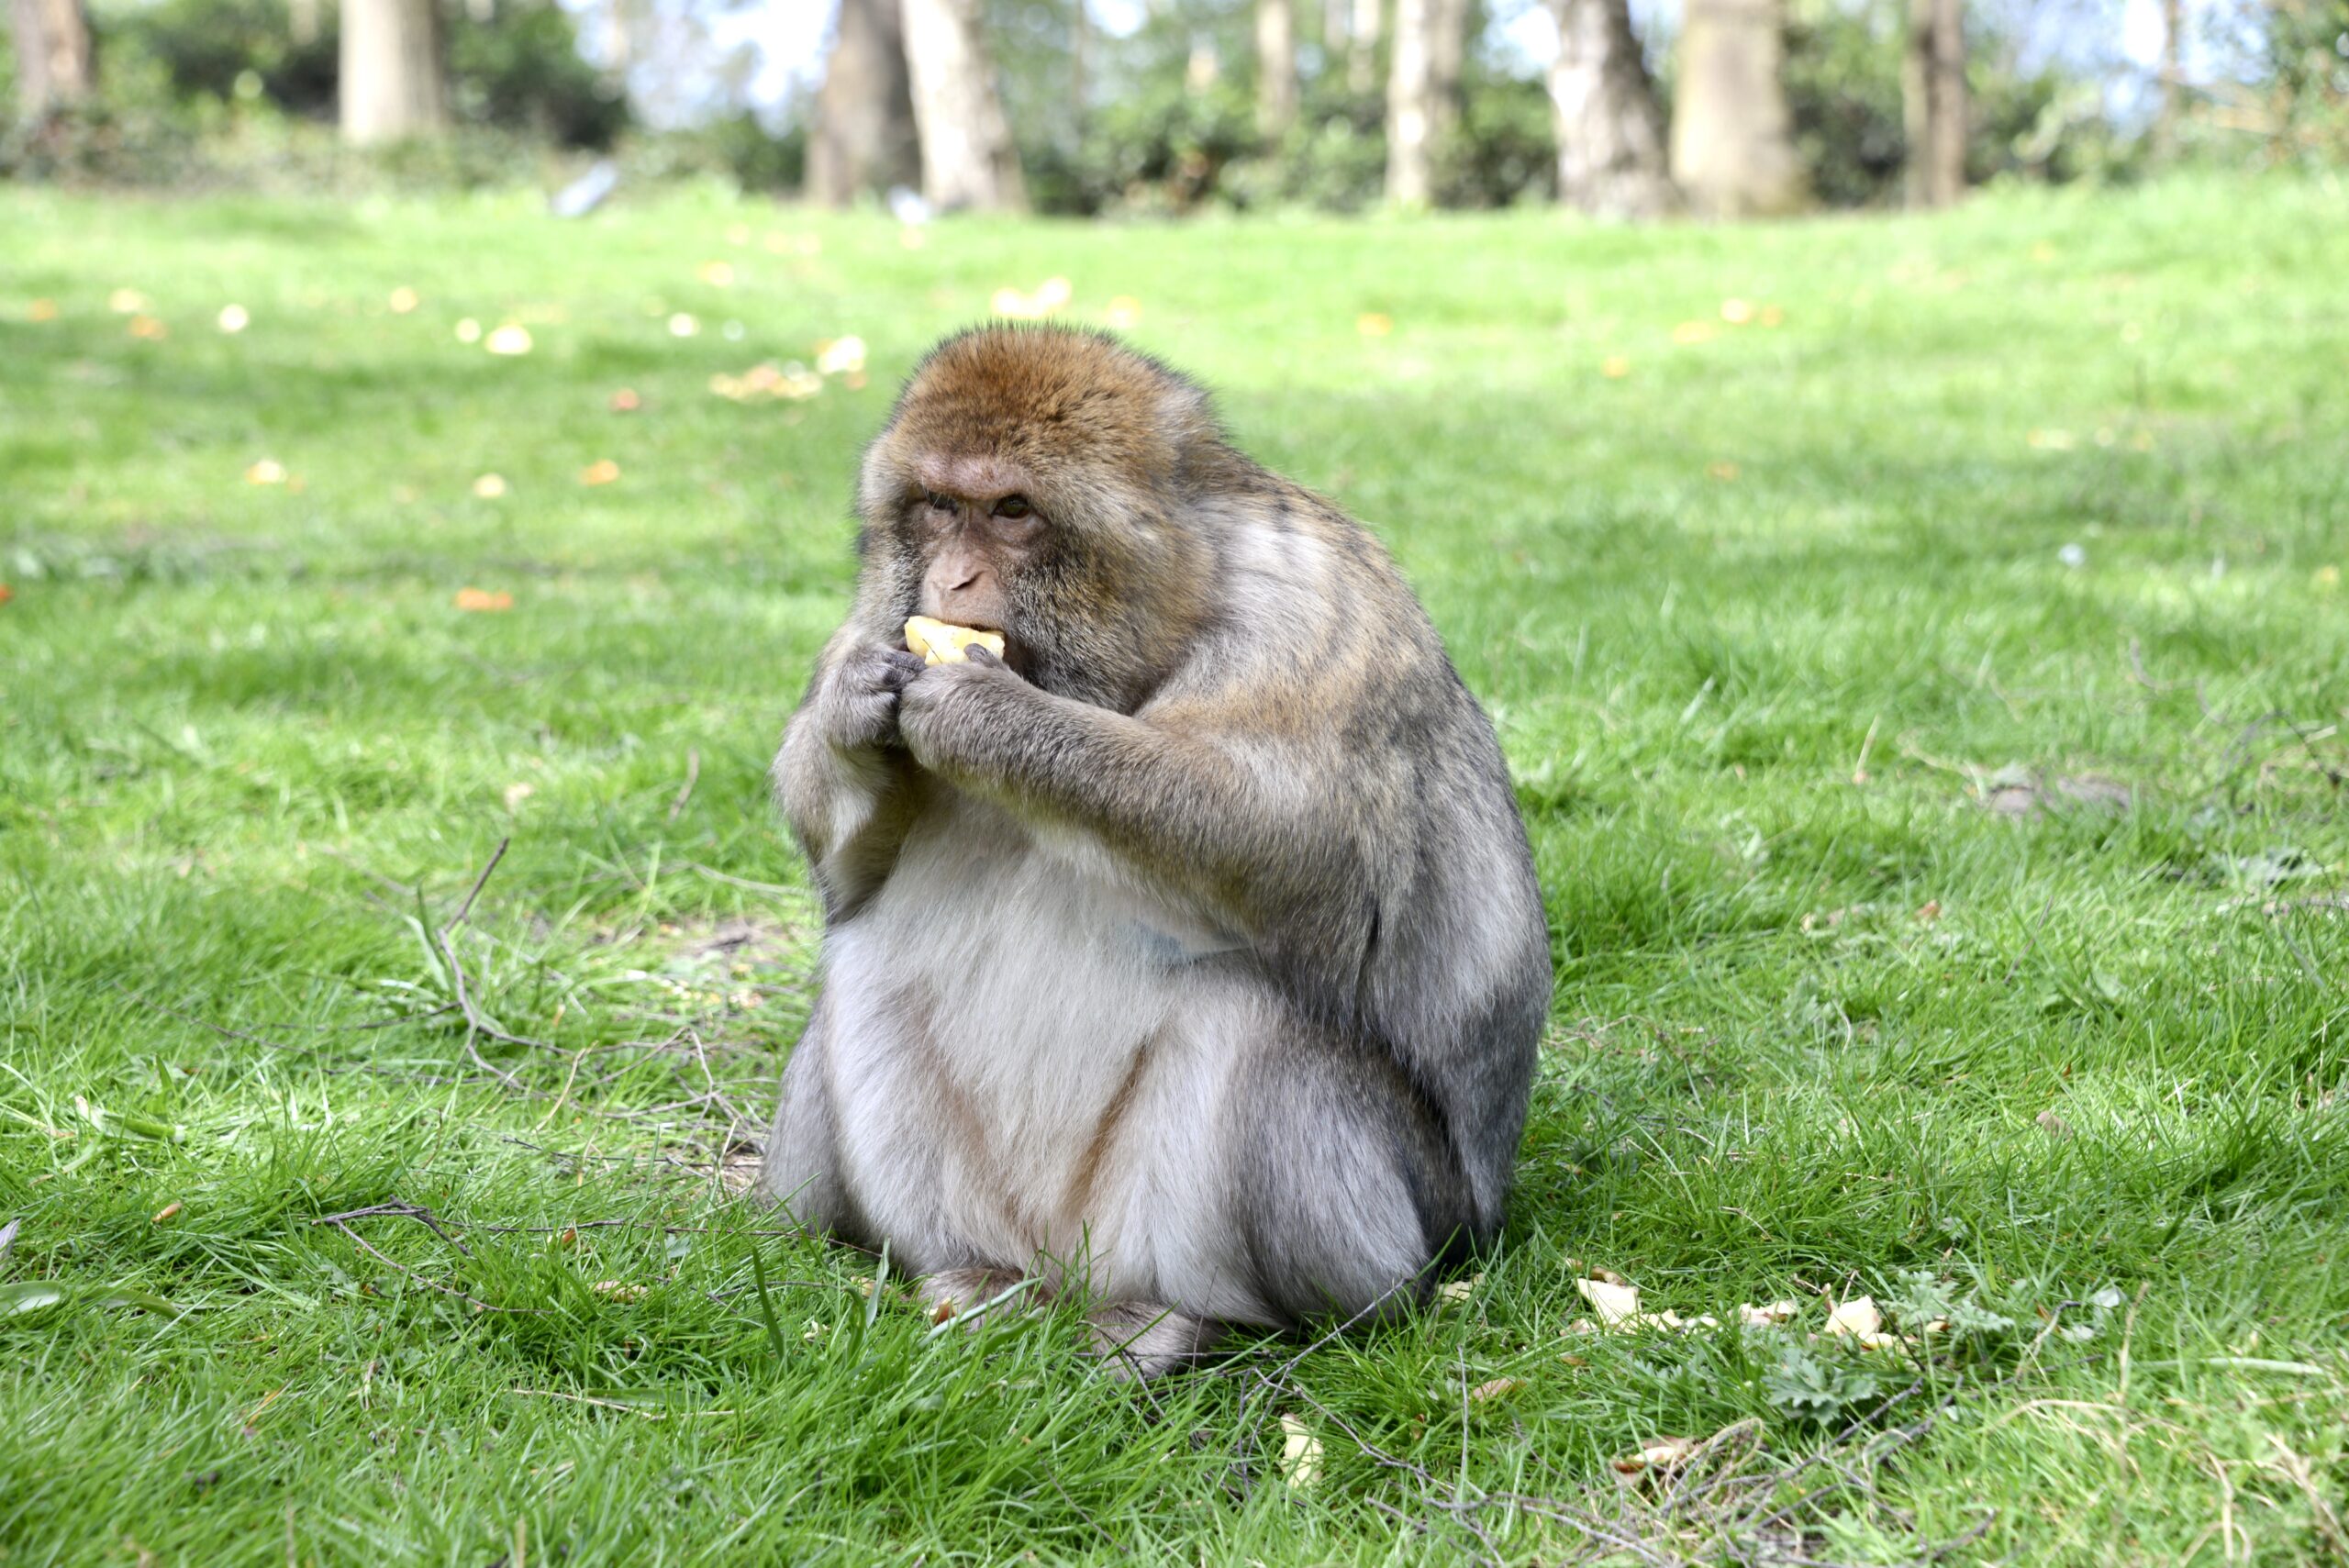 Monkey eating an apple